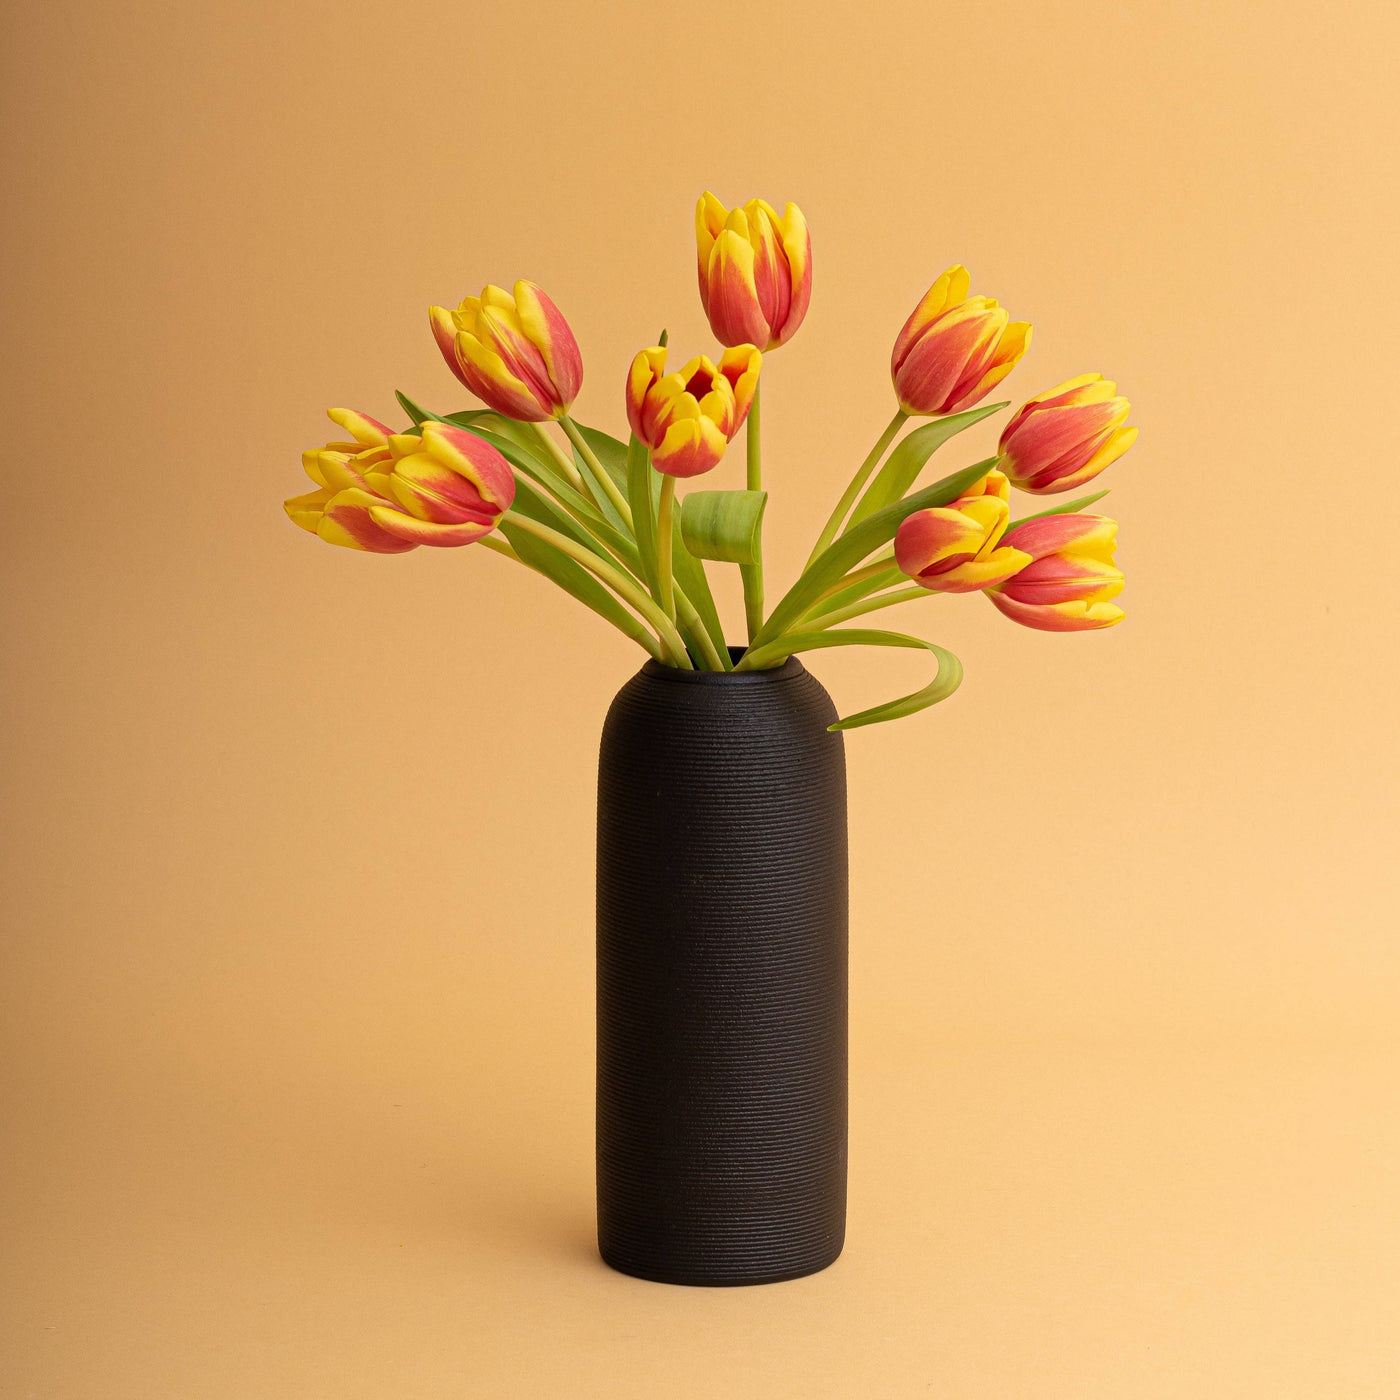 black pillar vase with tulips